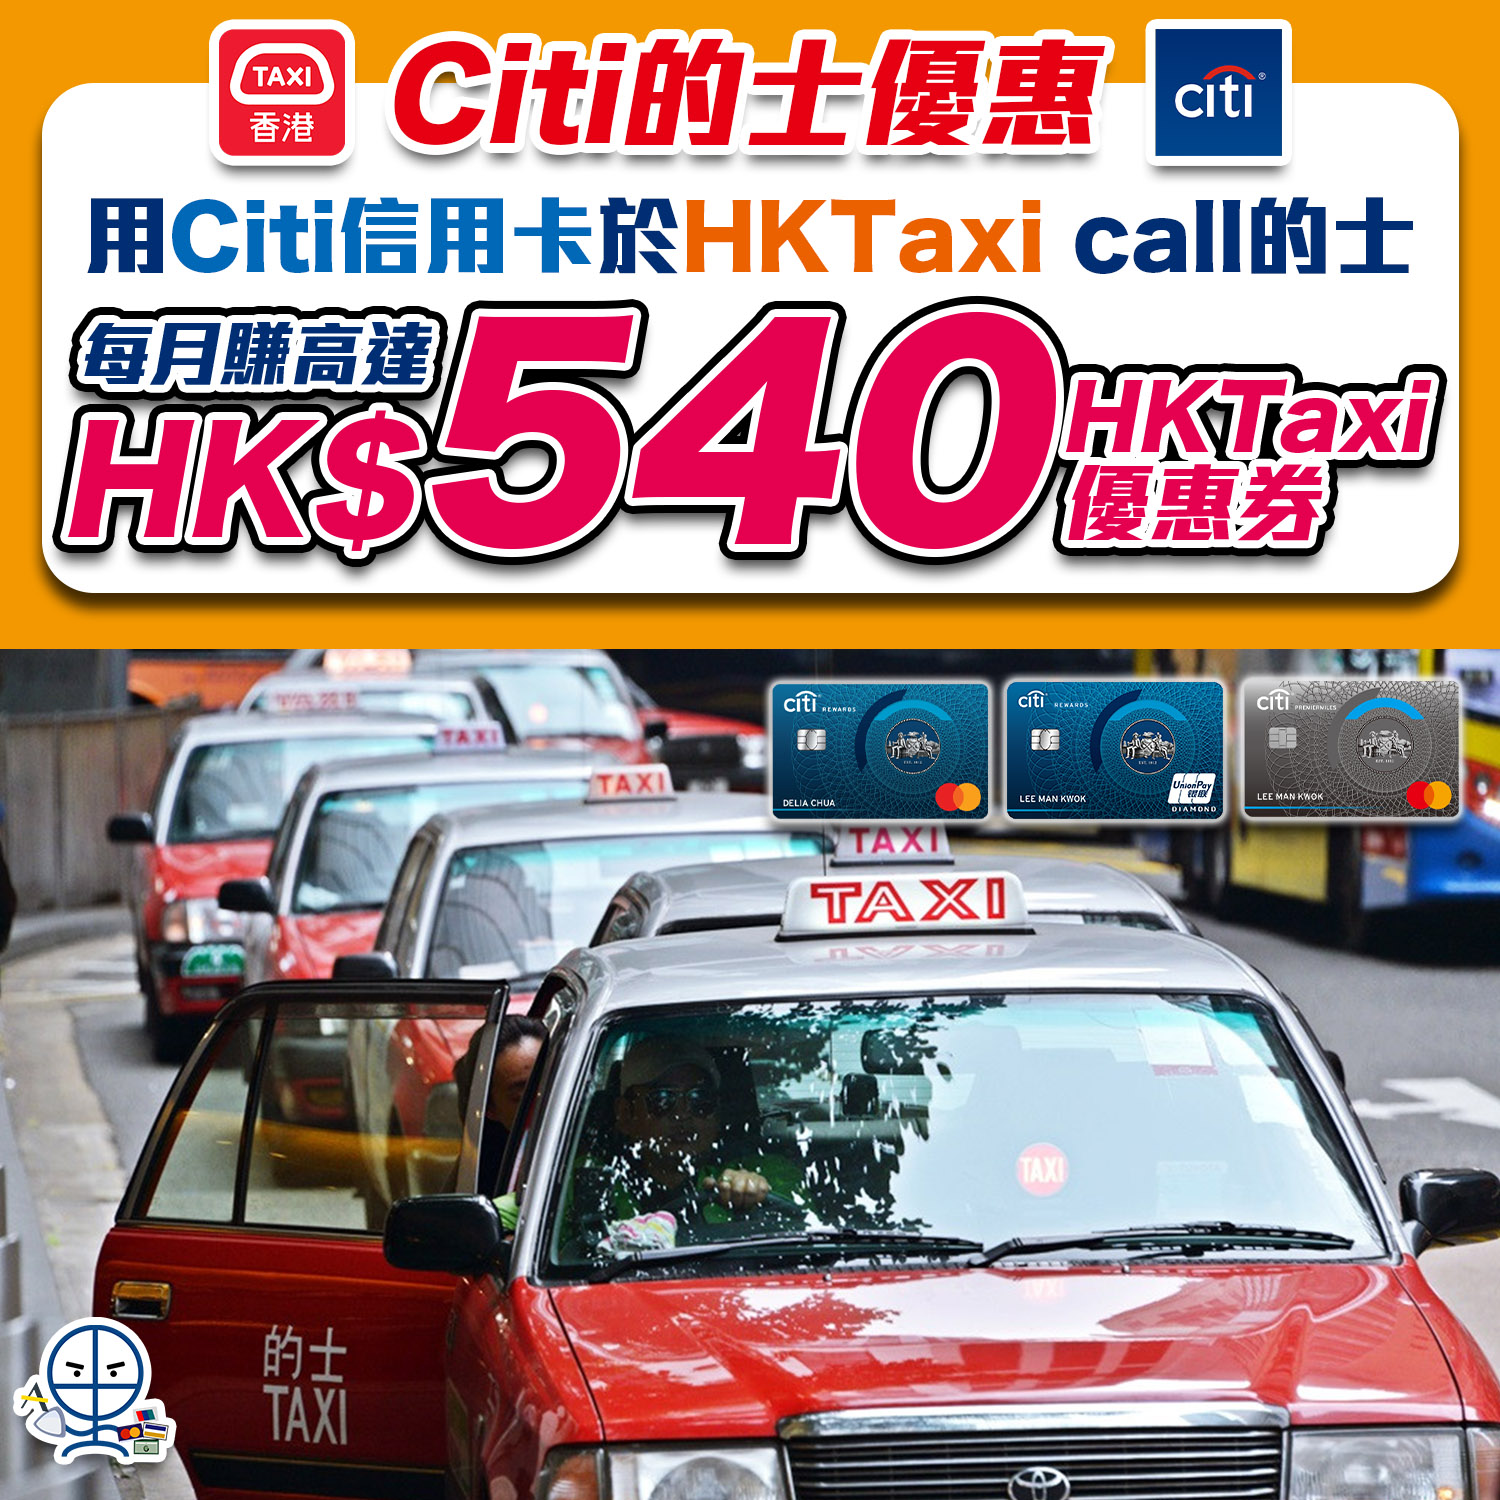 【Citi HKTaxi優惠】Citibank信用卡每月賺$540 HKTaxi優惠券！預約的士享收費減免！